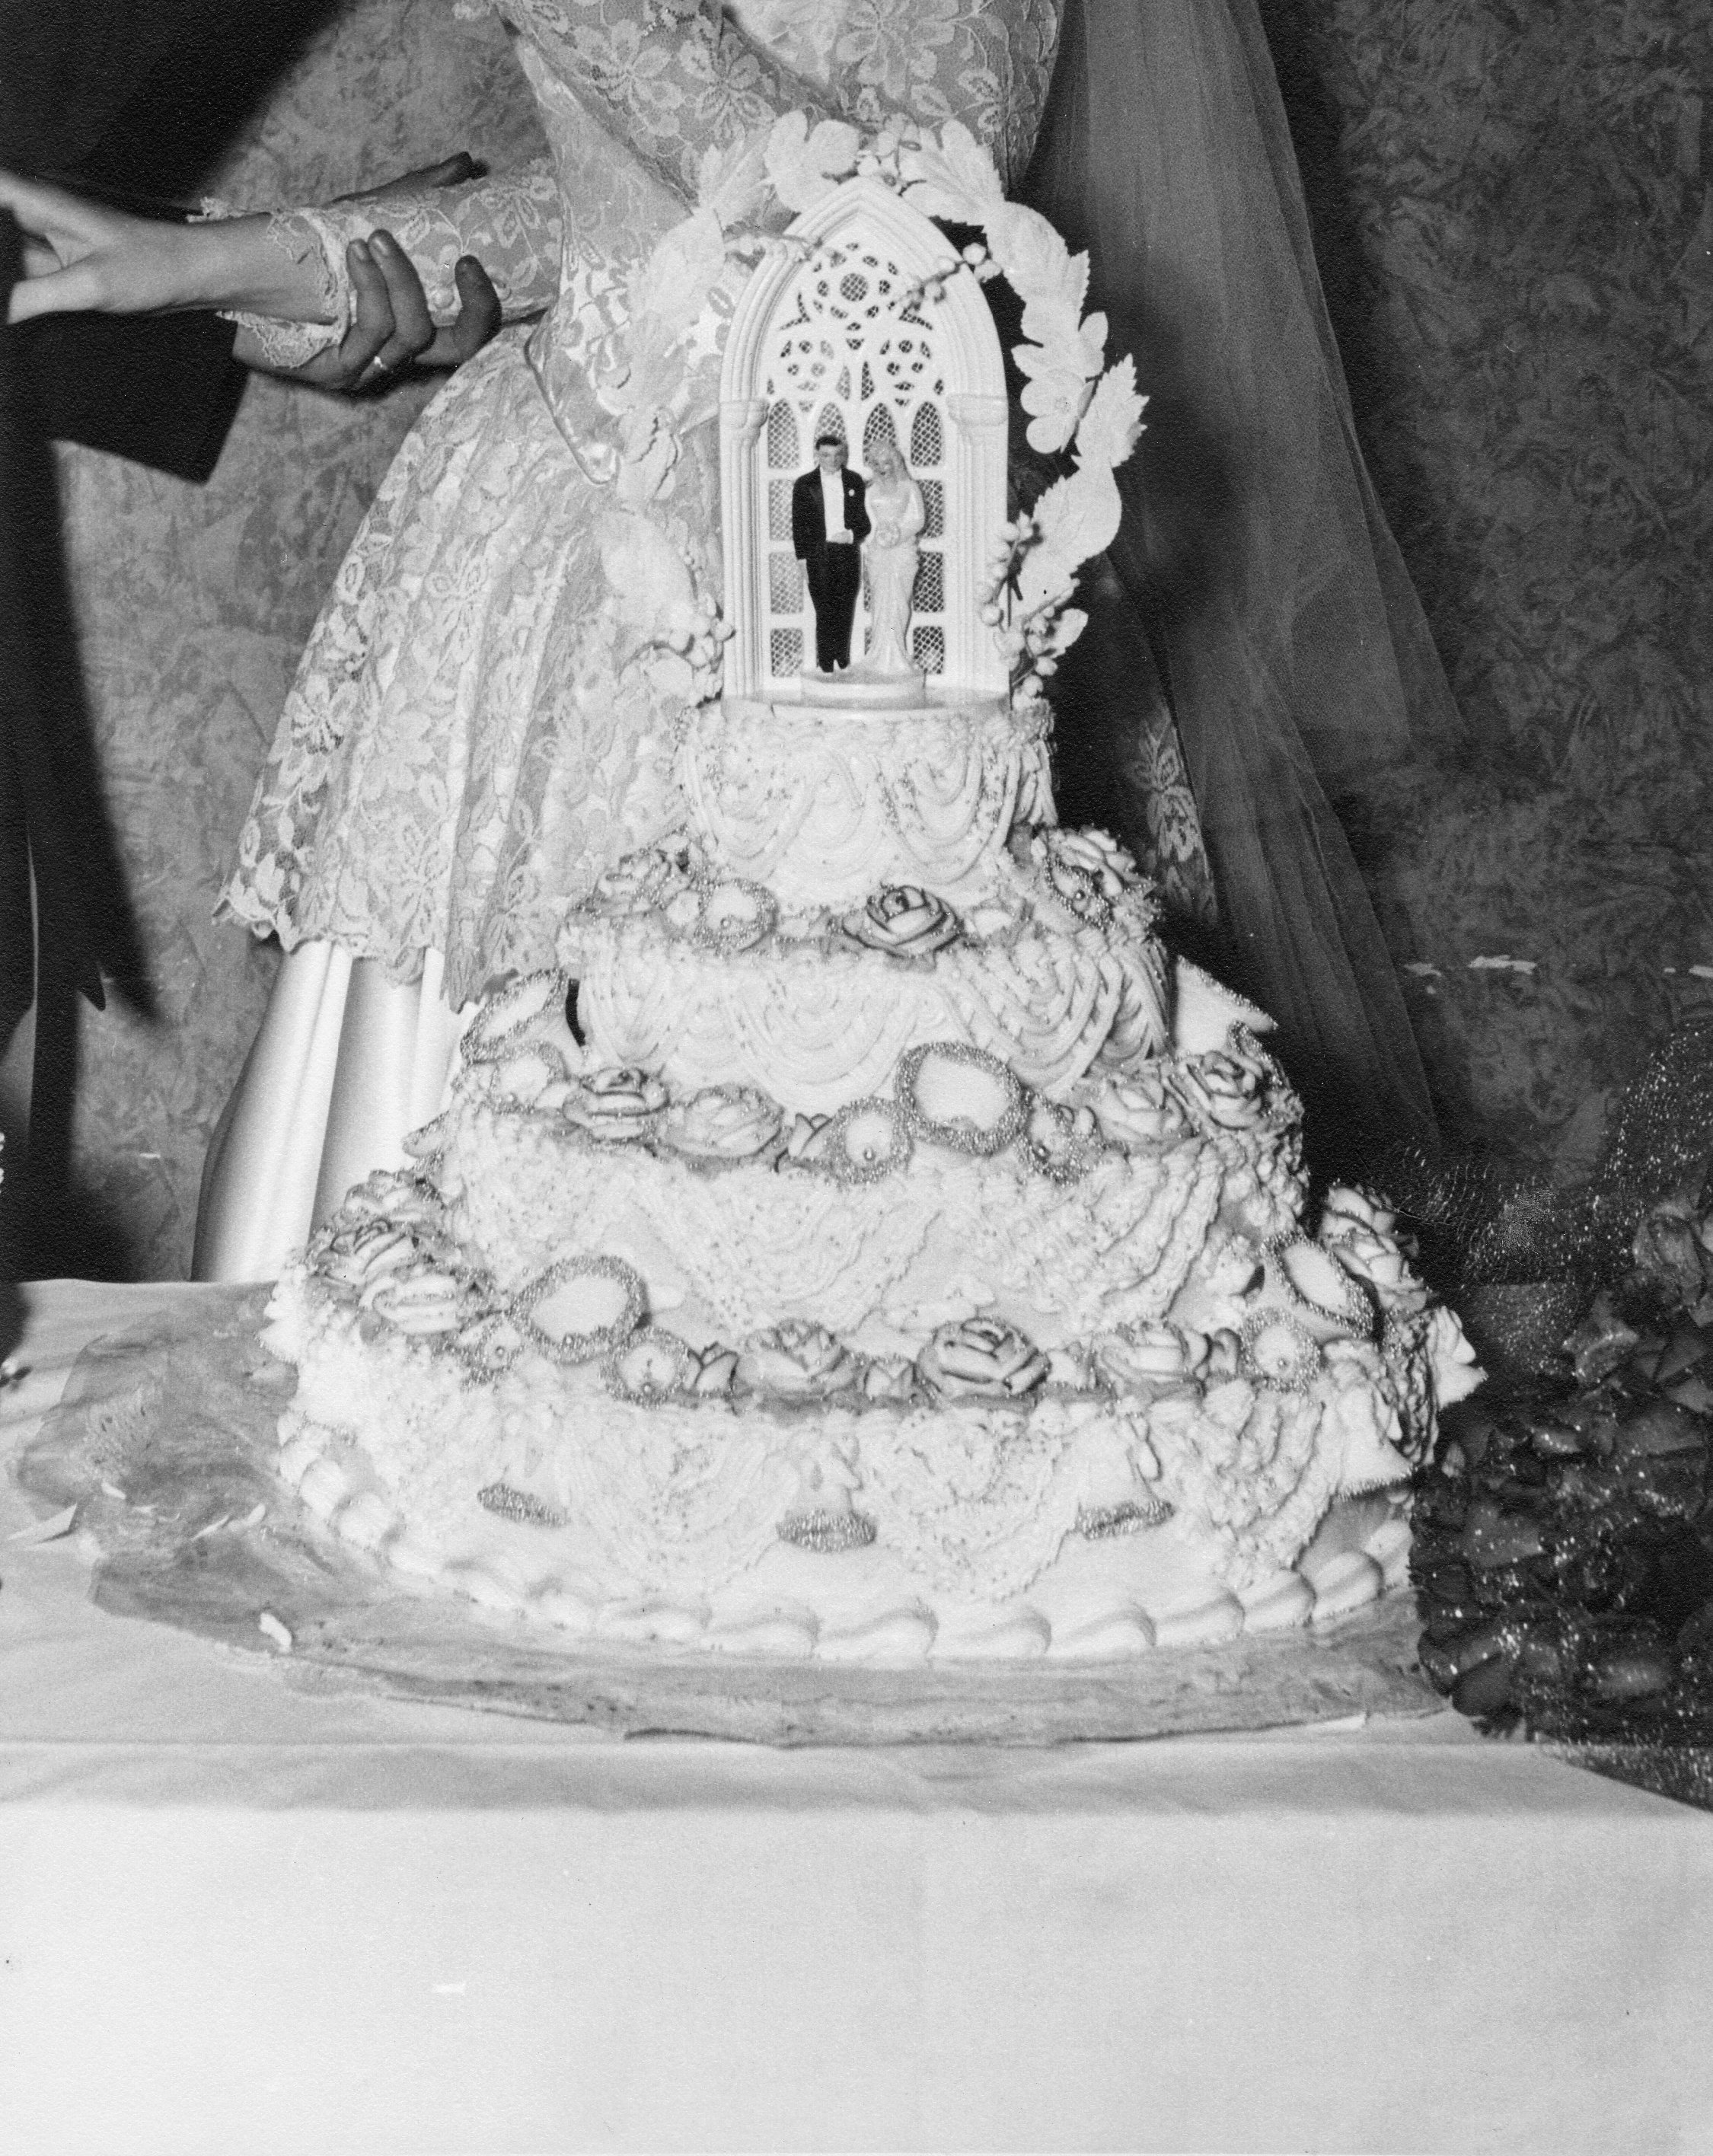 Ken Miller & Betty Lou (Beran) Miller Cake, NE